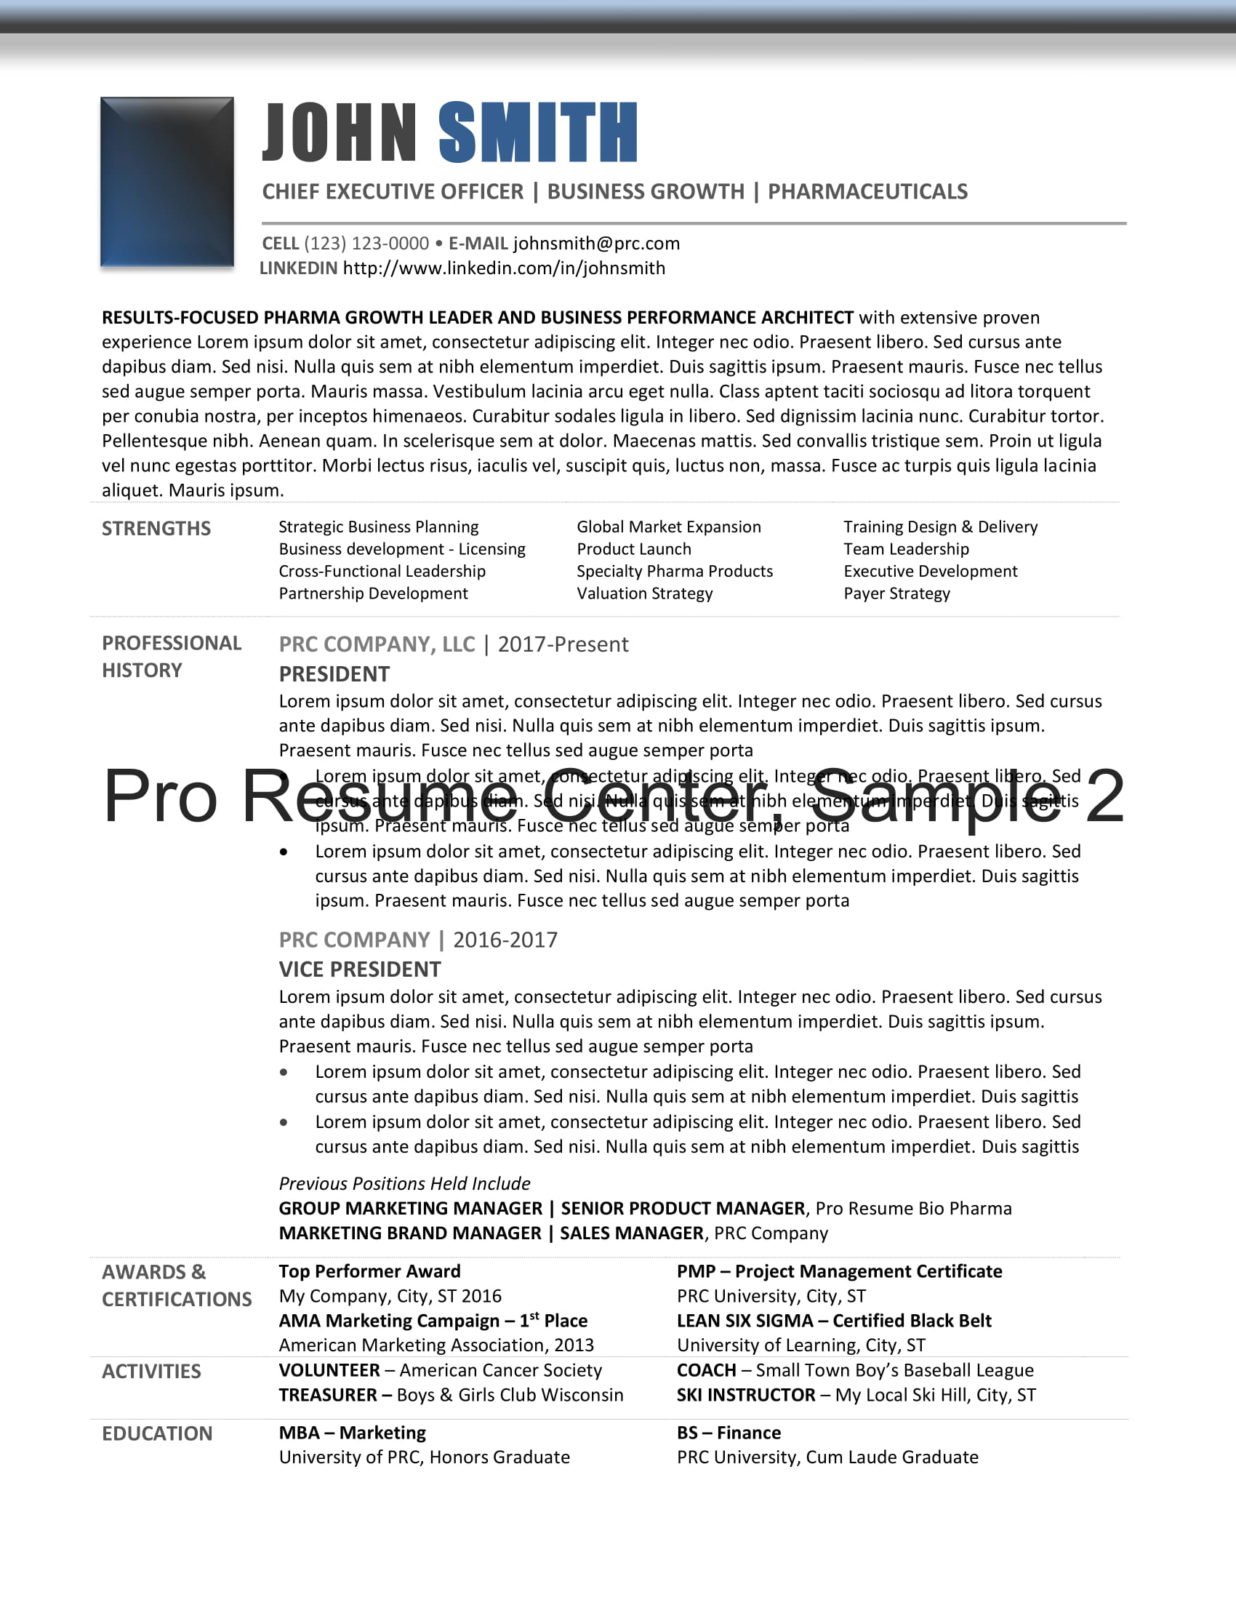 Resume Format Sample 2